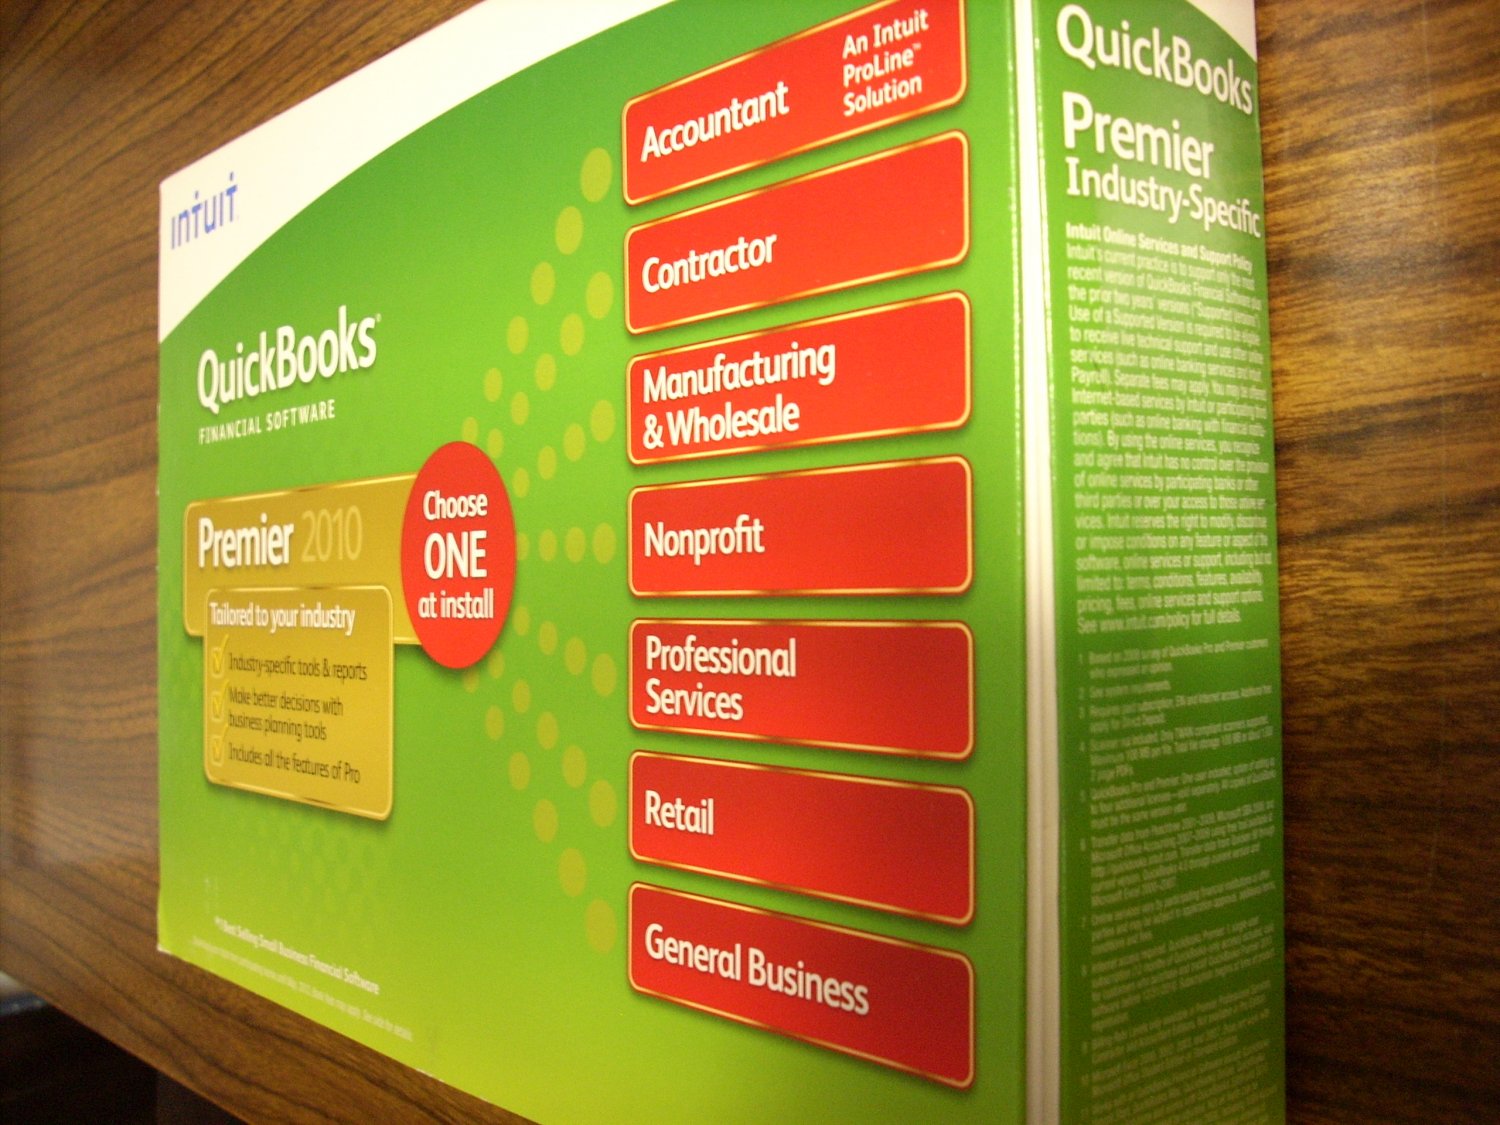 Quickbooks Premier 2010 Professional Services